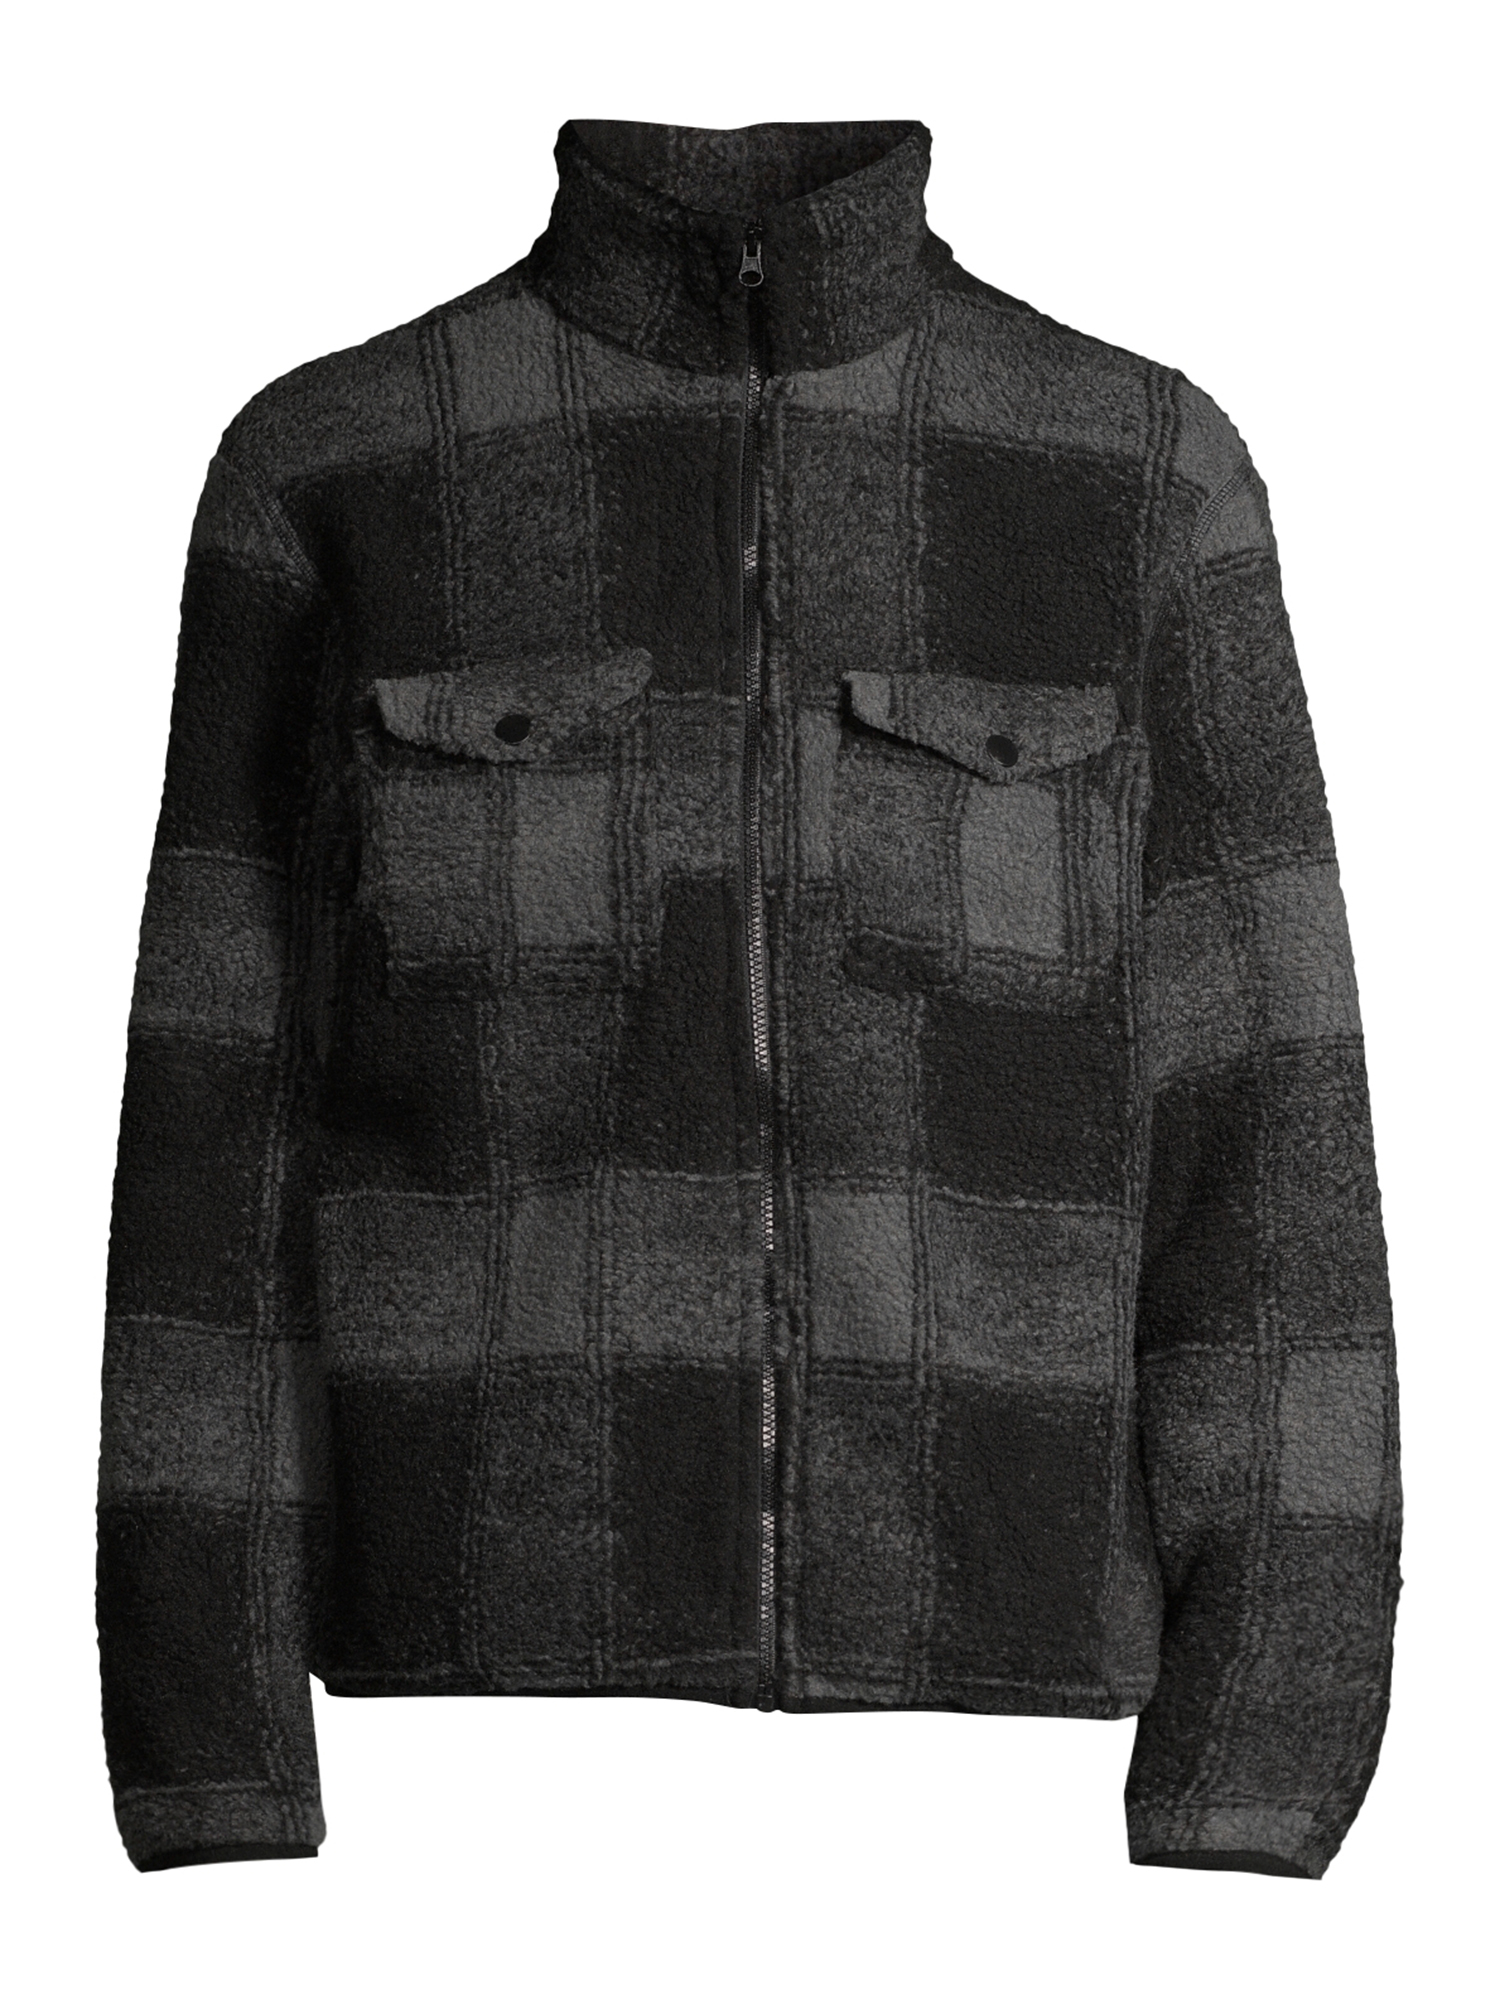 I5 Apparel Men's Buffalo Plaid Full Zip Sherpa Jacket, Sizes M-XXL - image 2 of 6